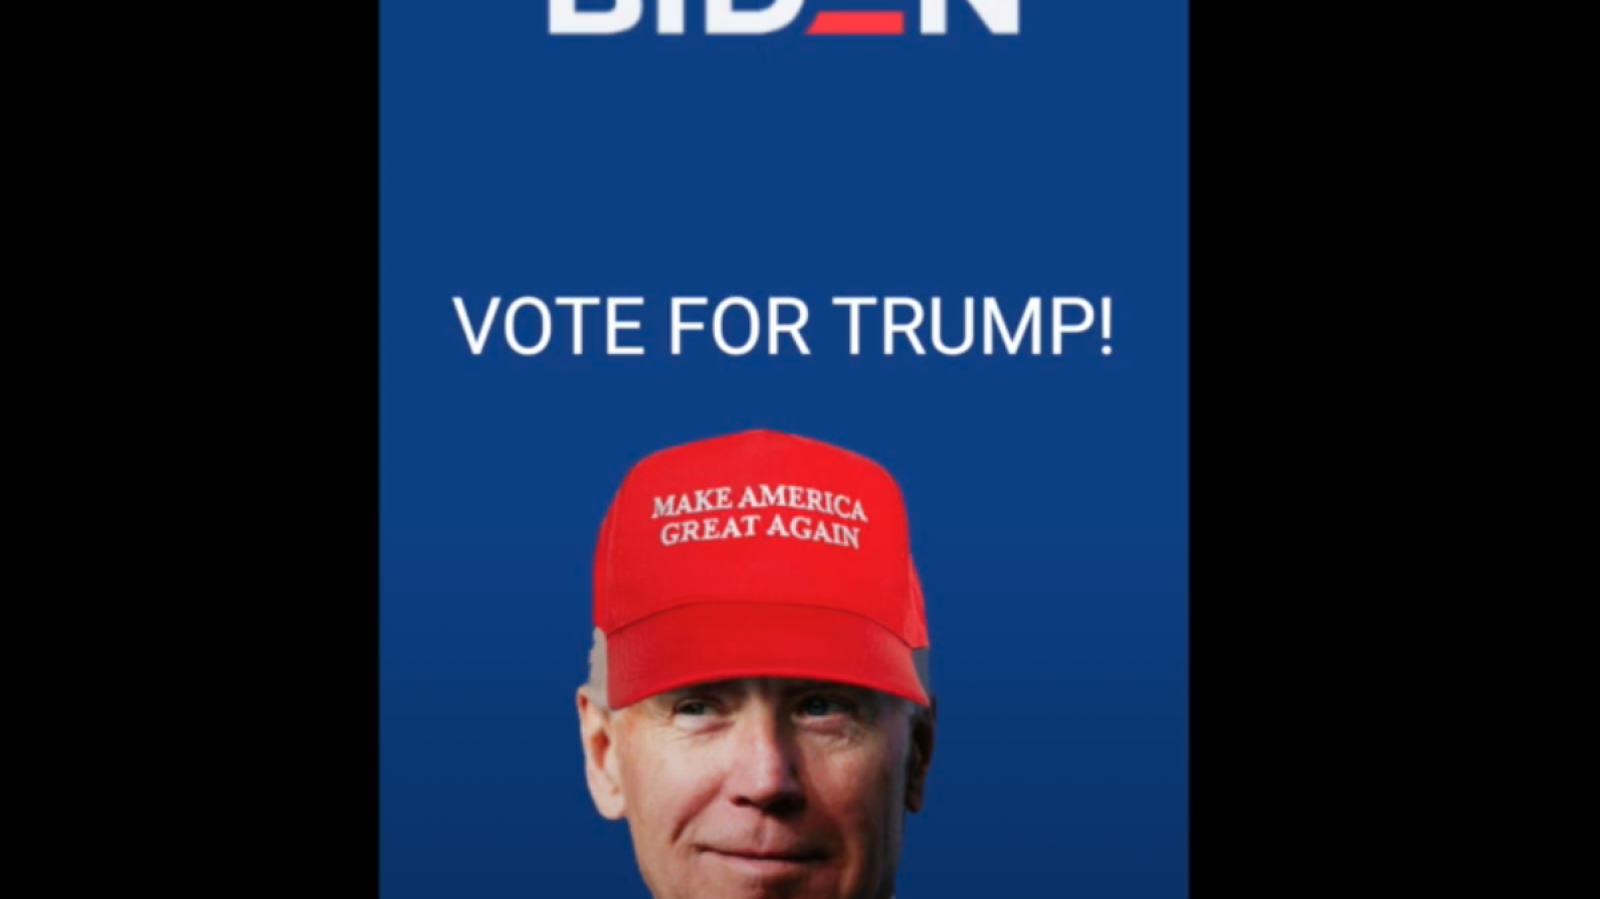 Biden Campaign App Hack Shows Him Wearing Maga Hat Telling